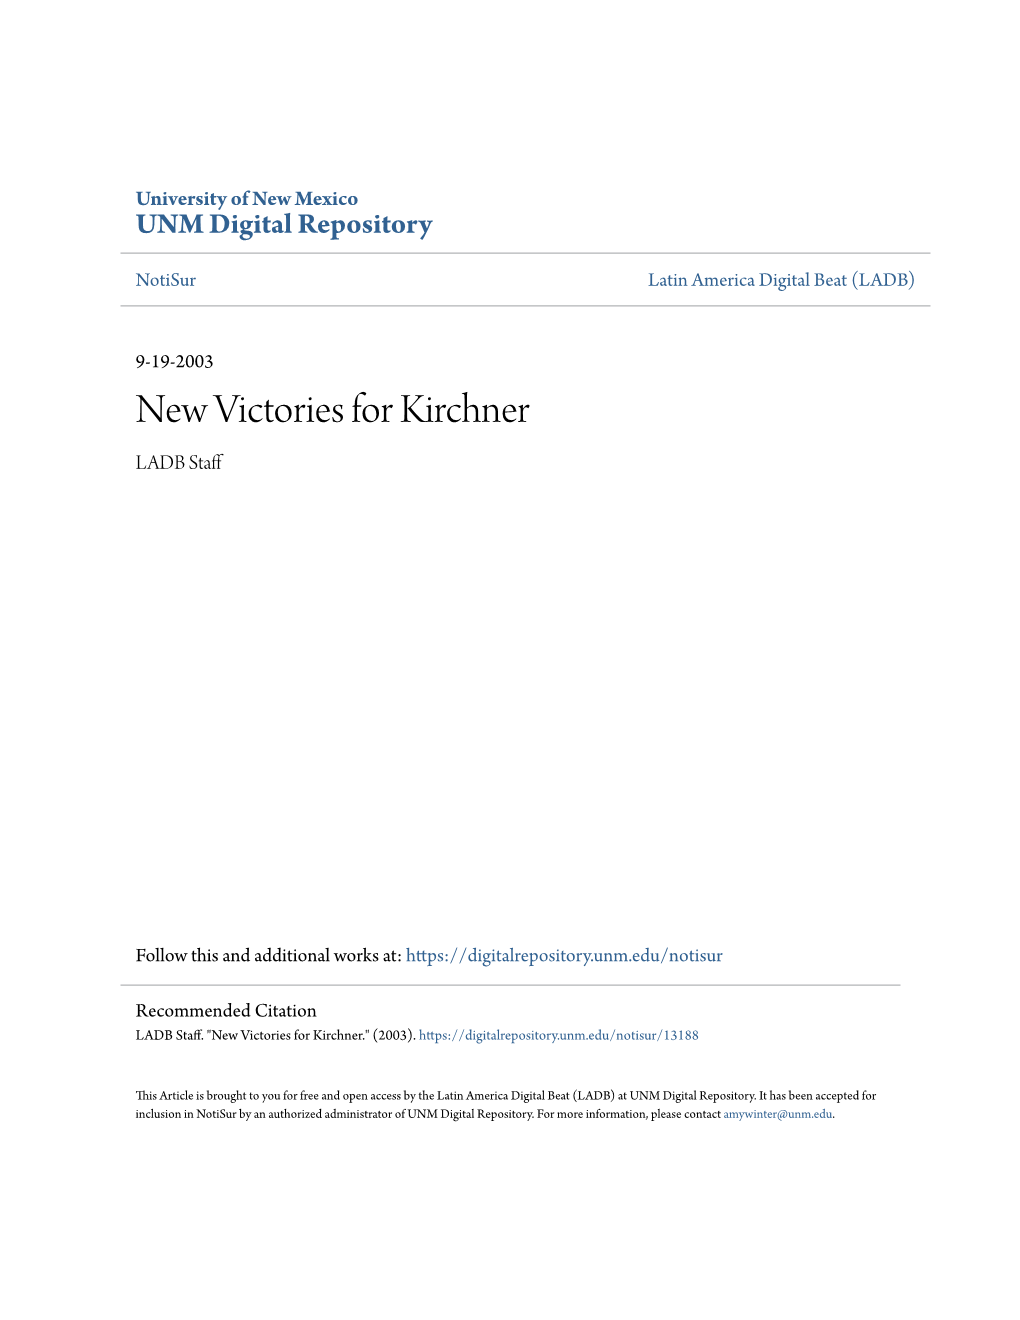 New Victories for Kirchner LADB Staff